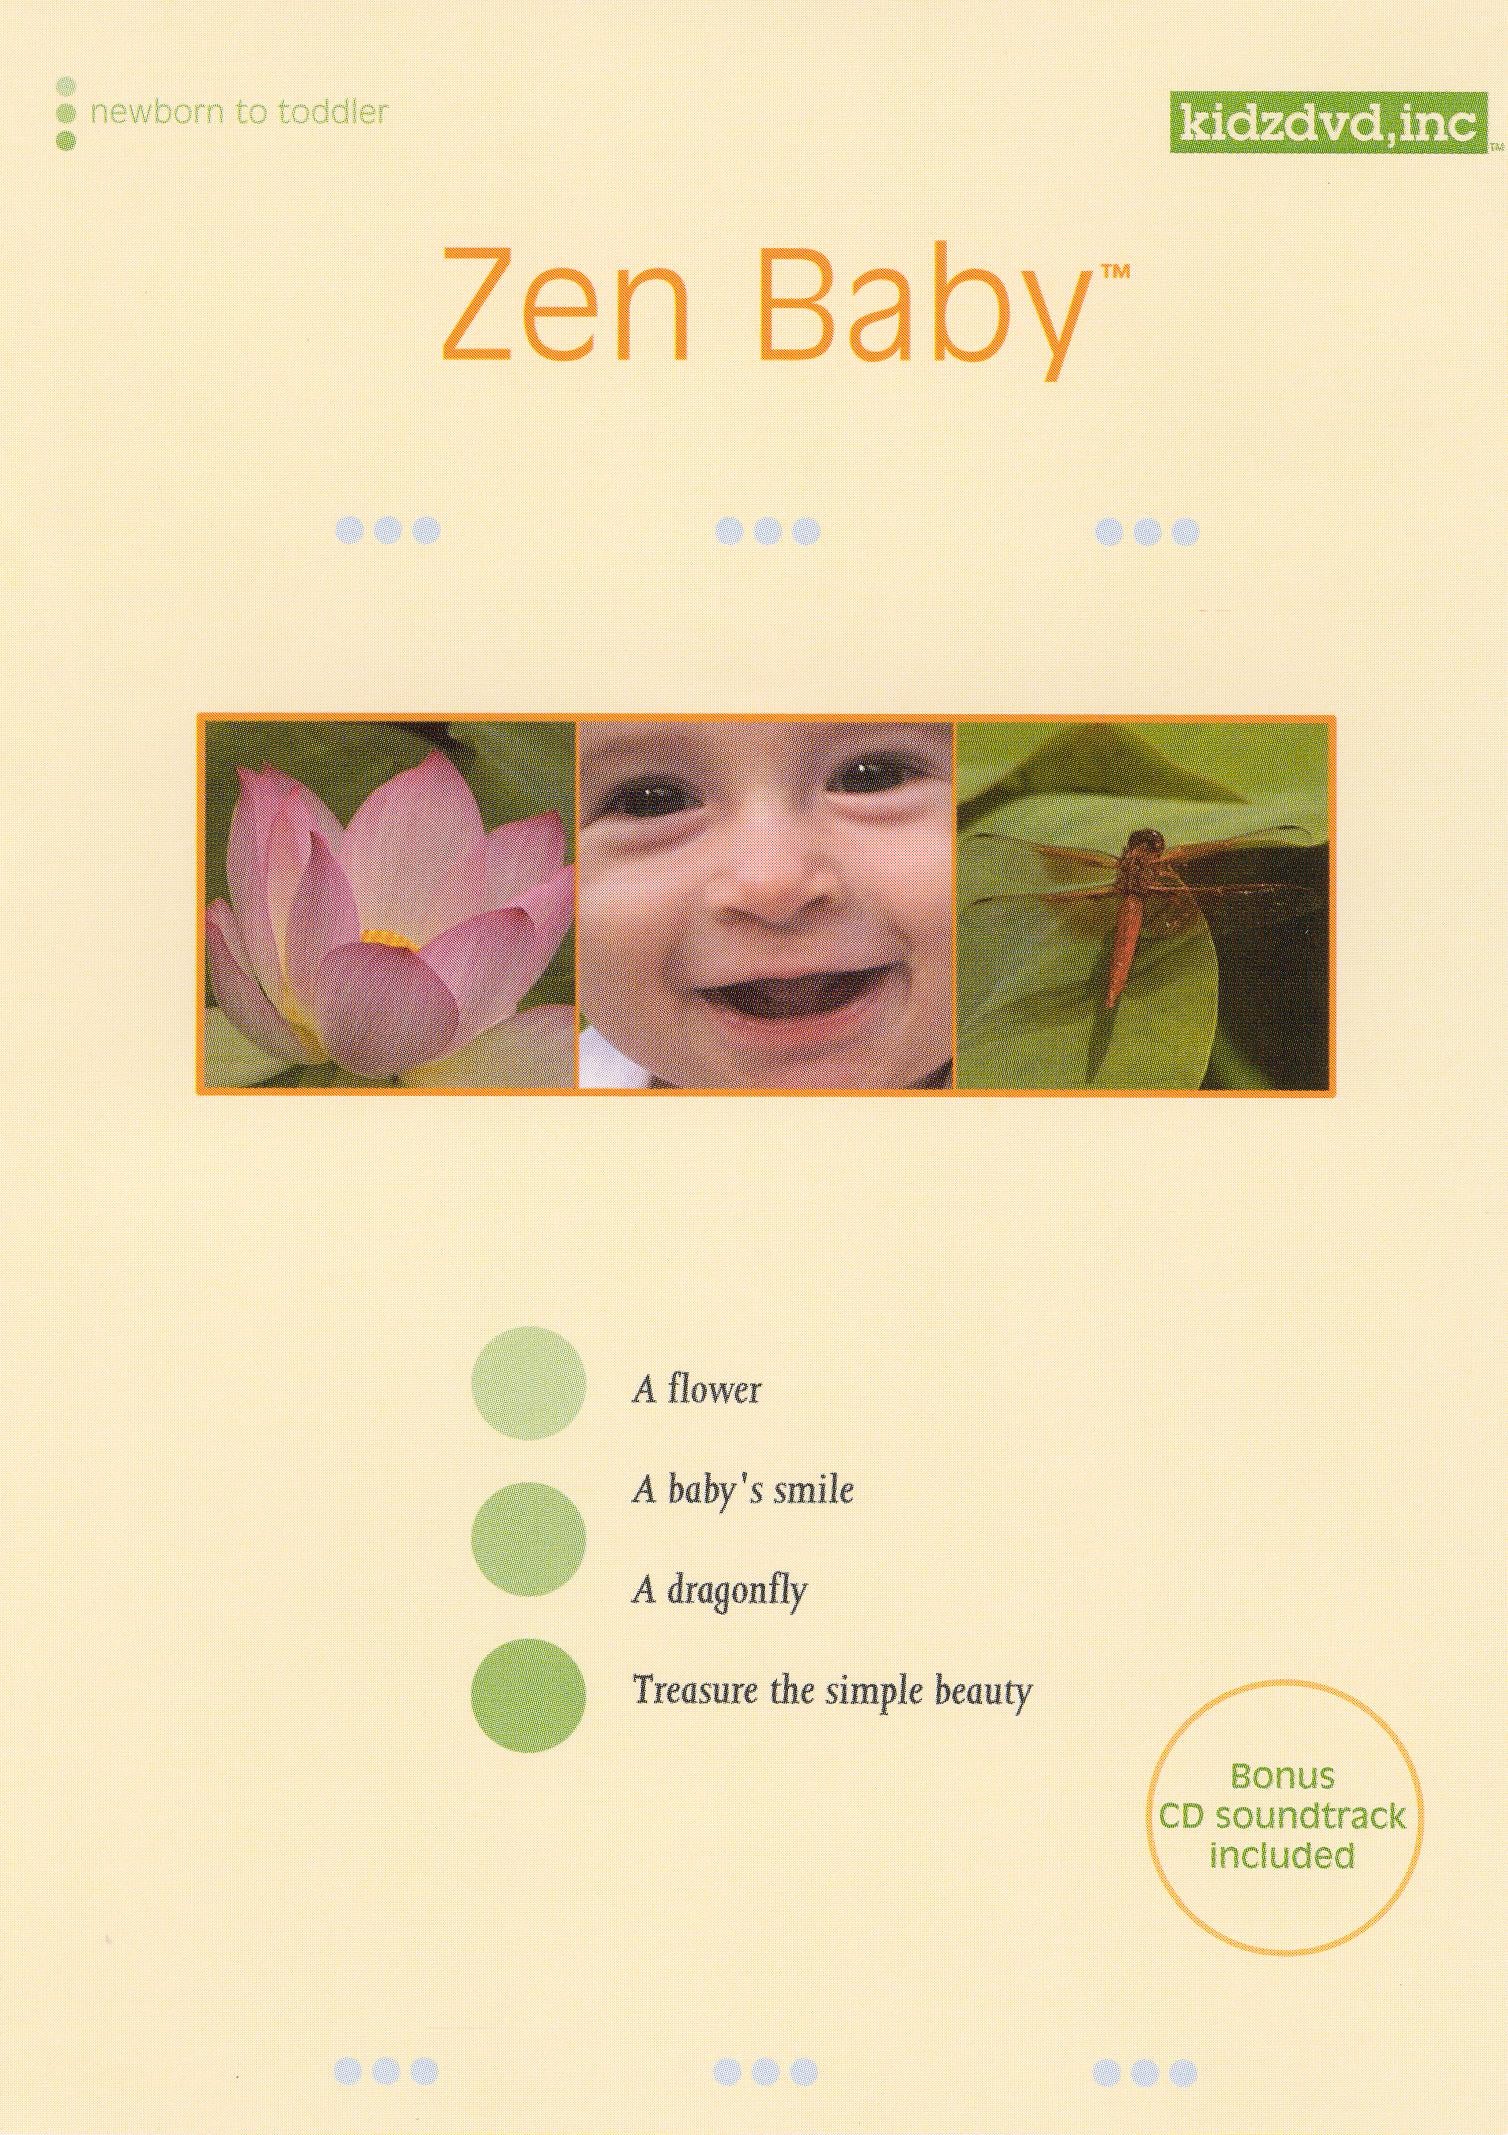 Zen Baby: Newborn To Toddler [DVD & CD] cover art